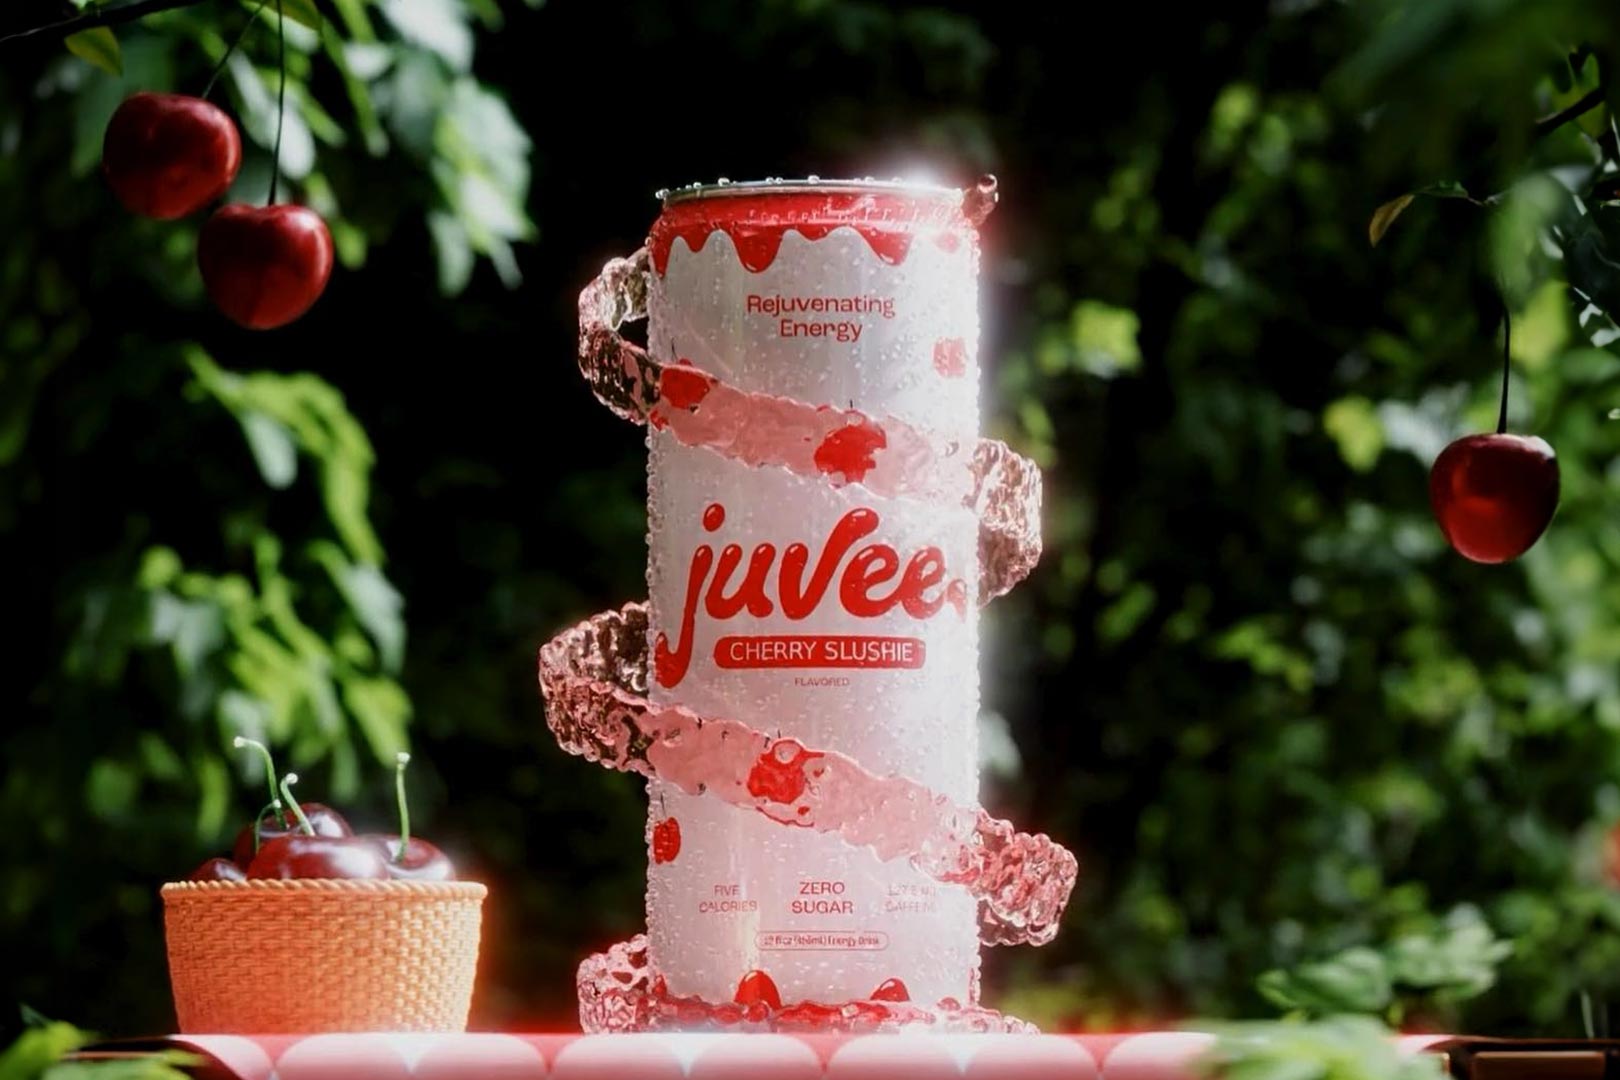 Cherry Slushie Juvee Energy Drink